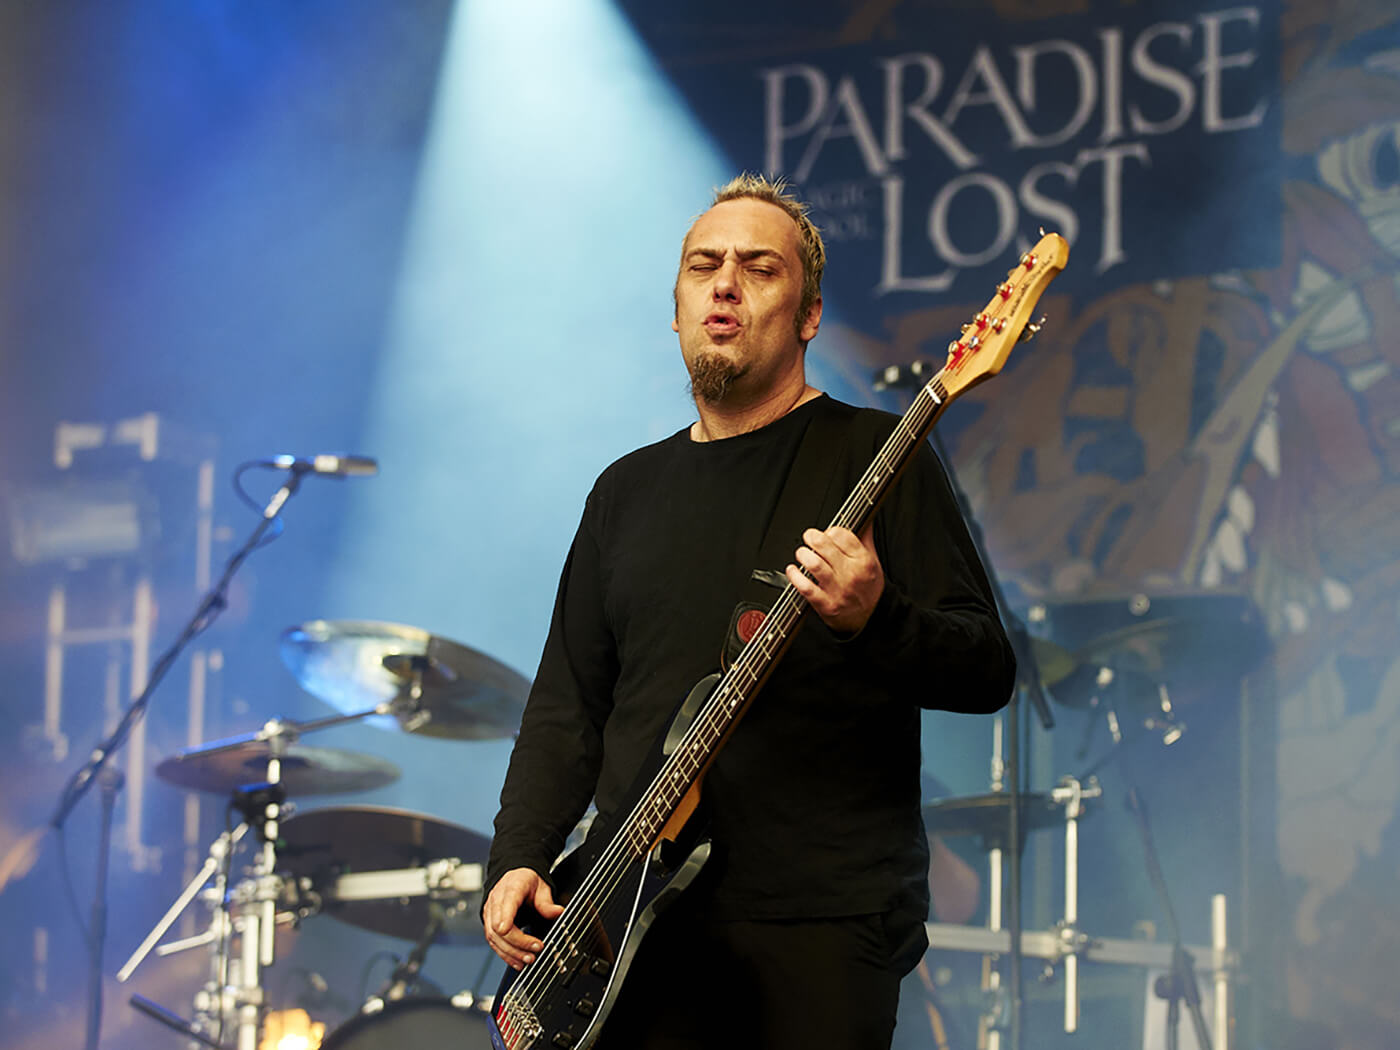 Steve Edmondson of Paradise Lost performing at Bloodstock Open Air in 2012